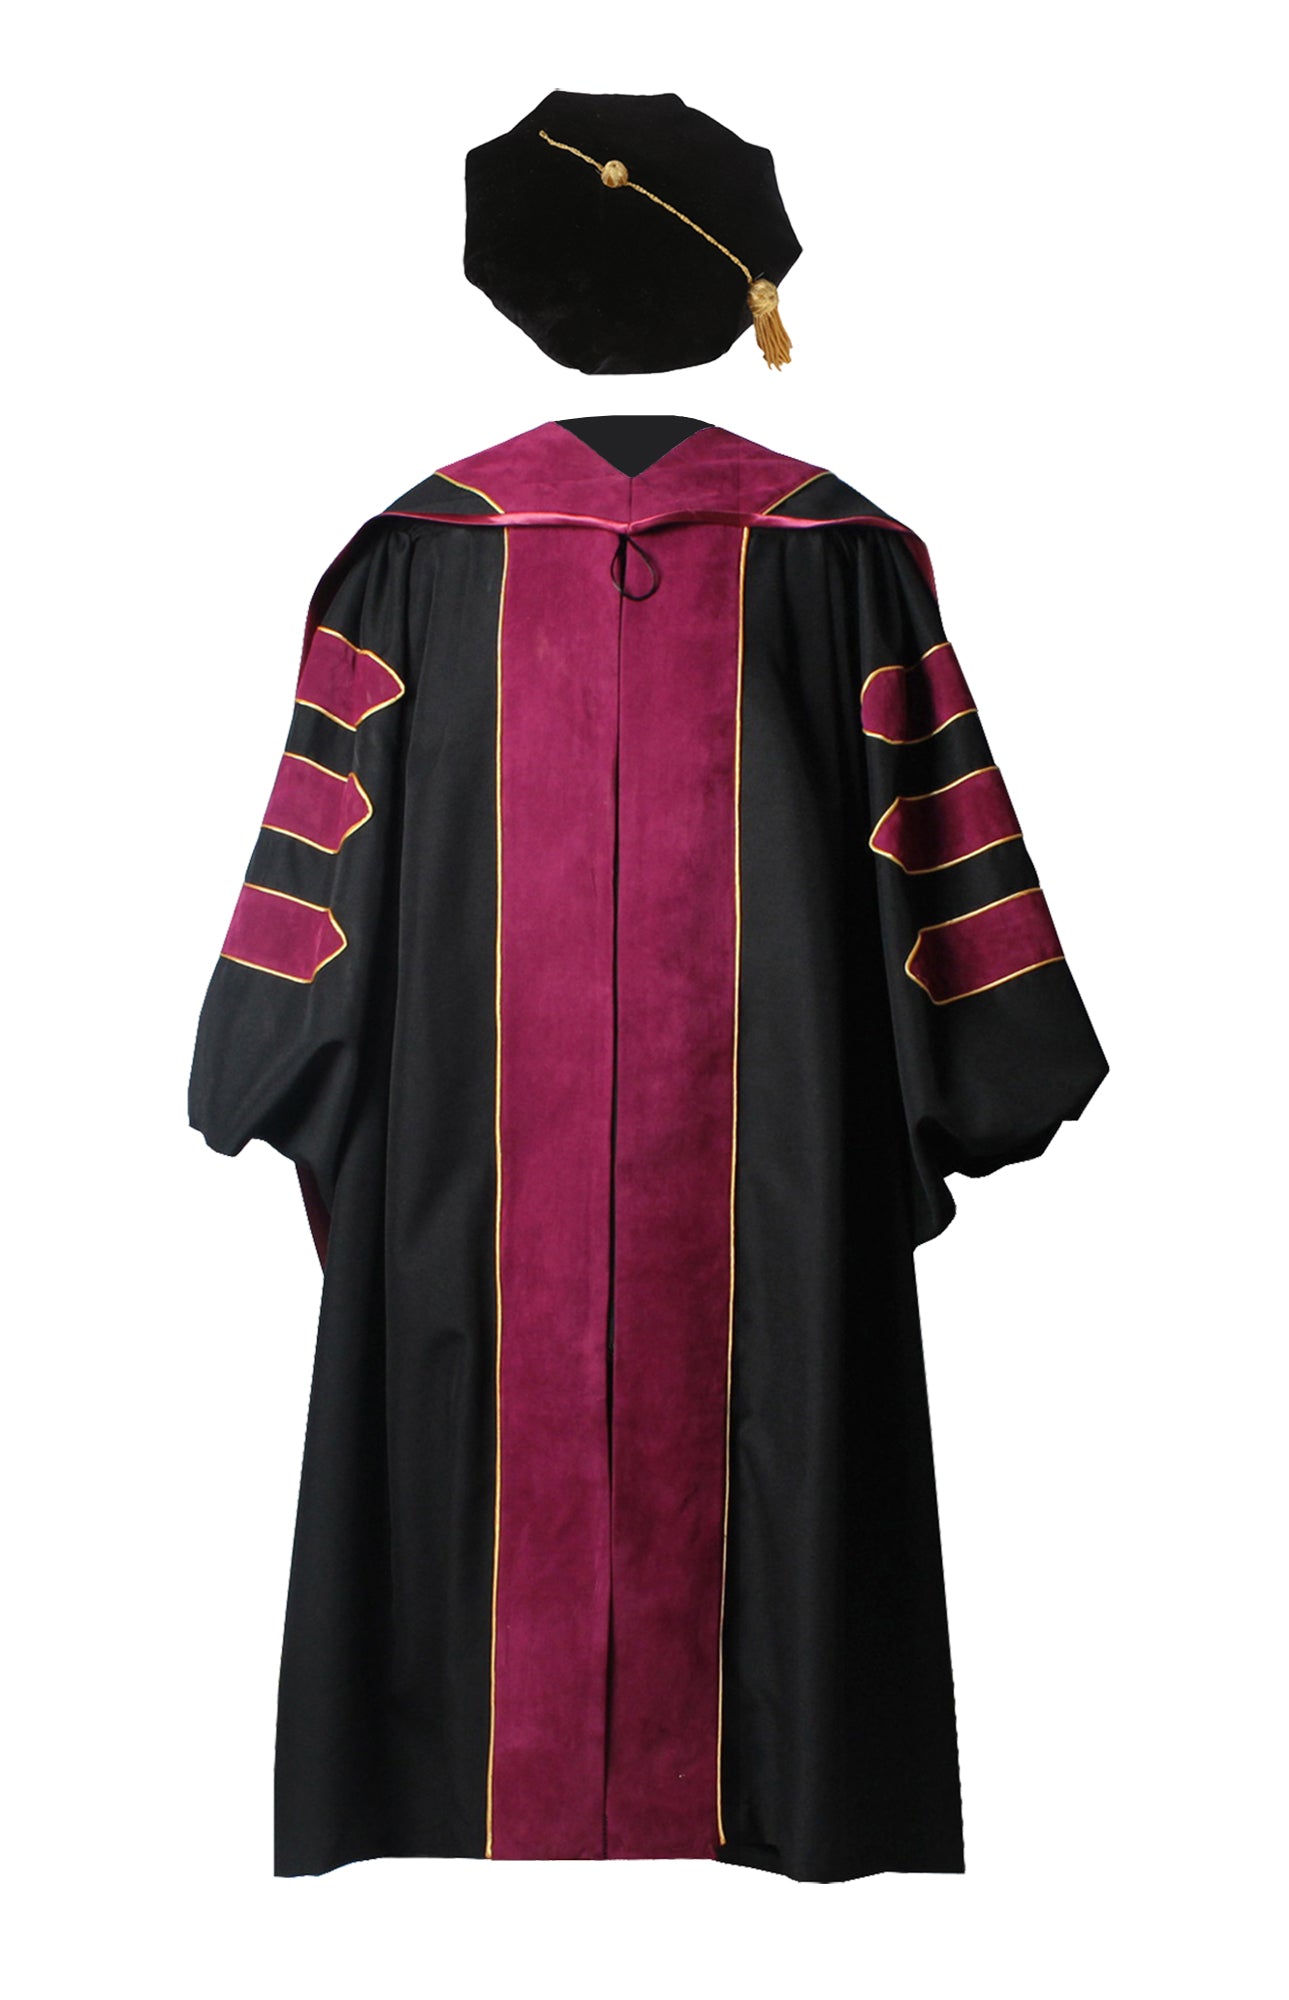 soas phd graduation gown